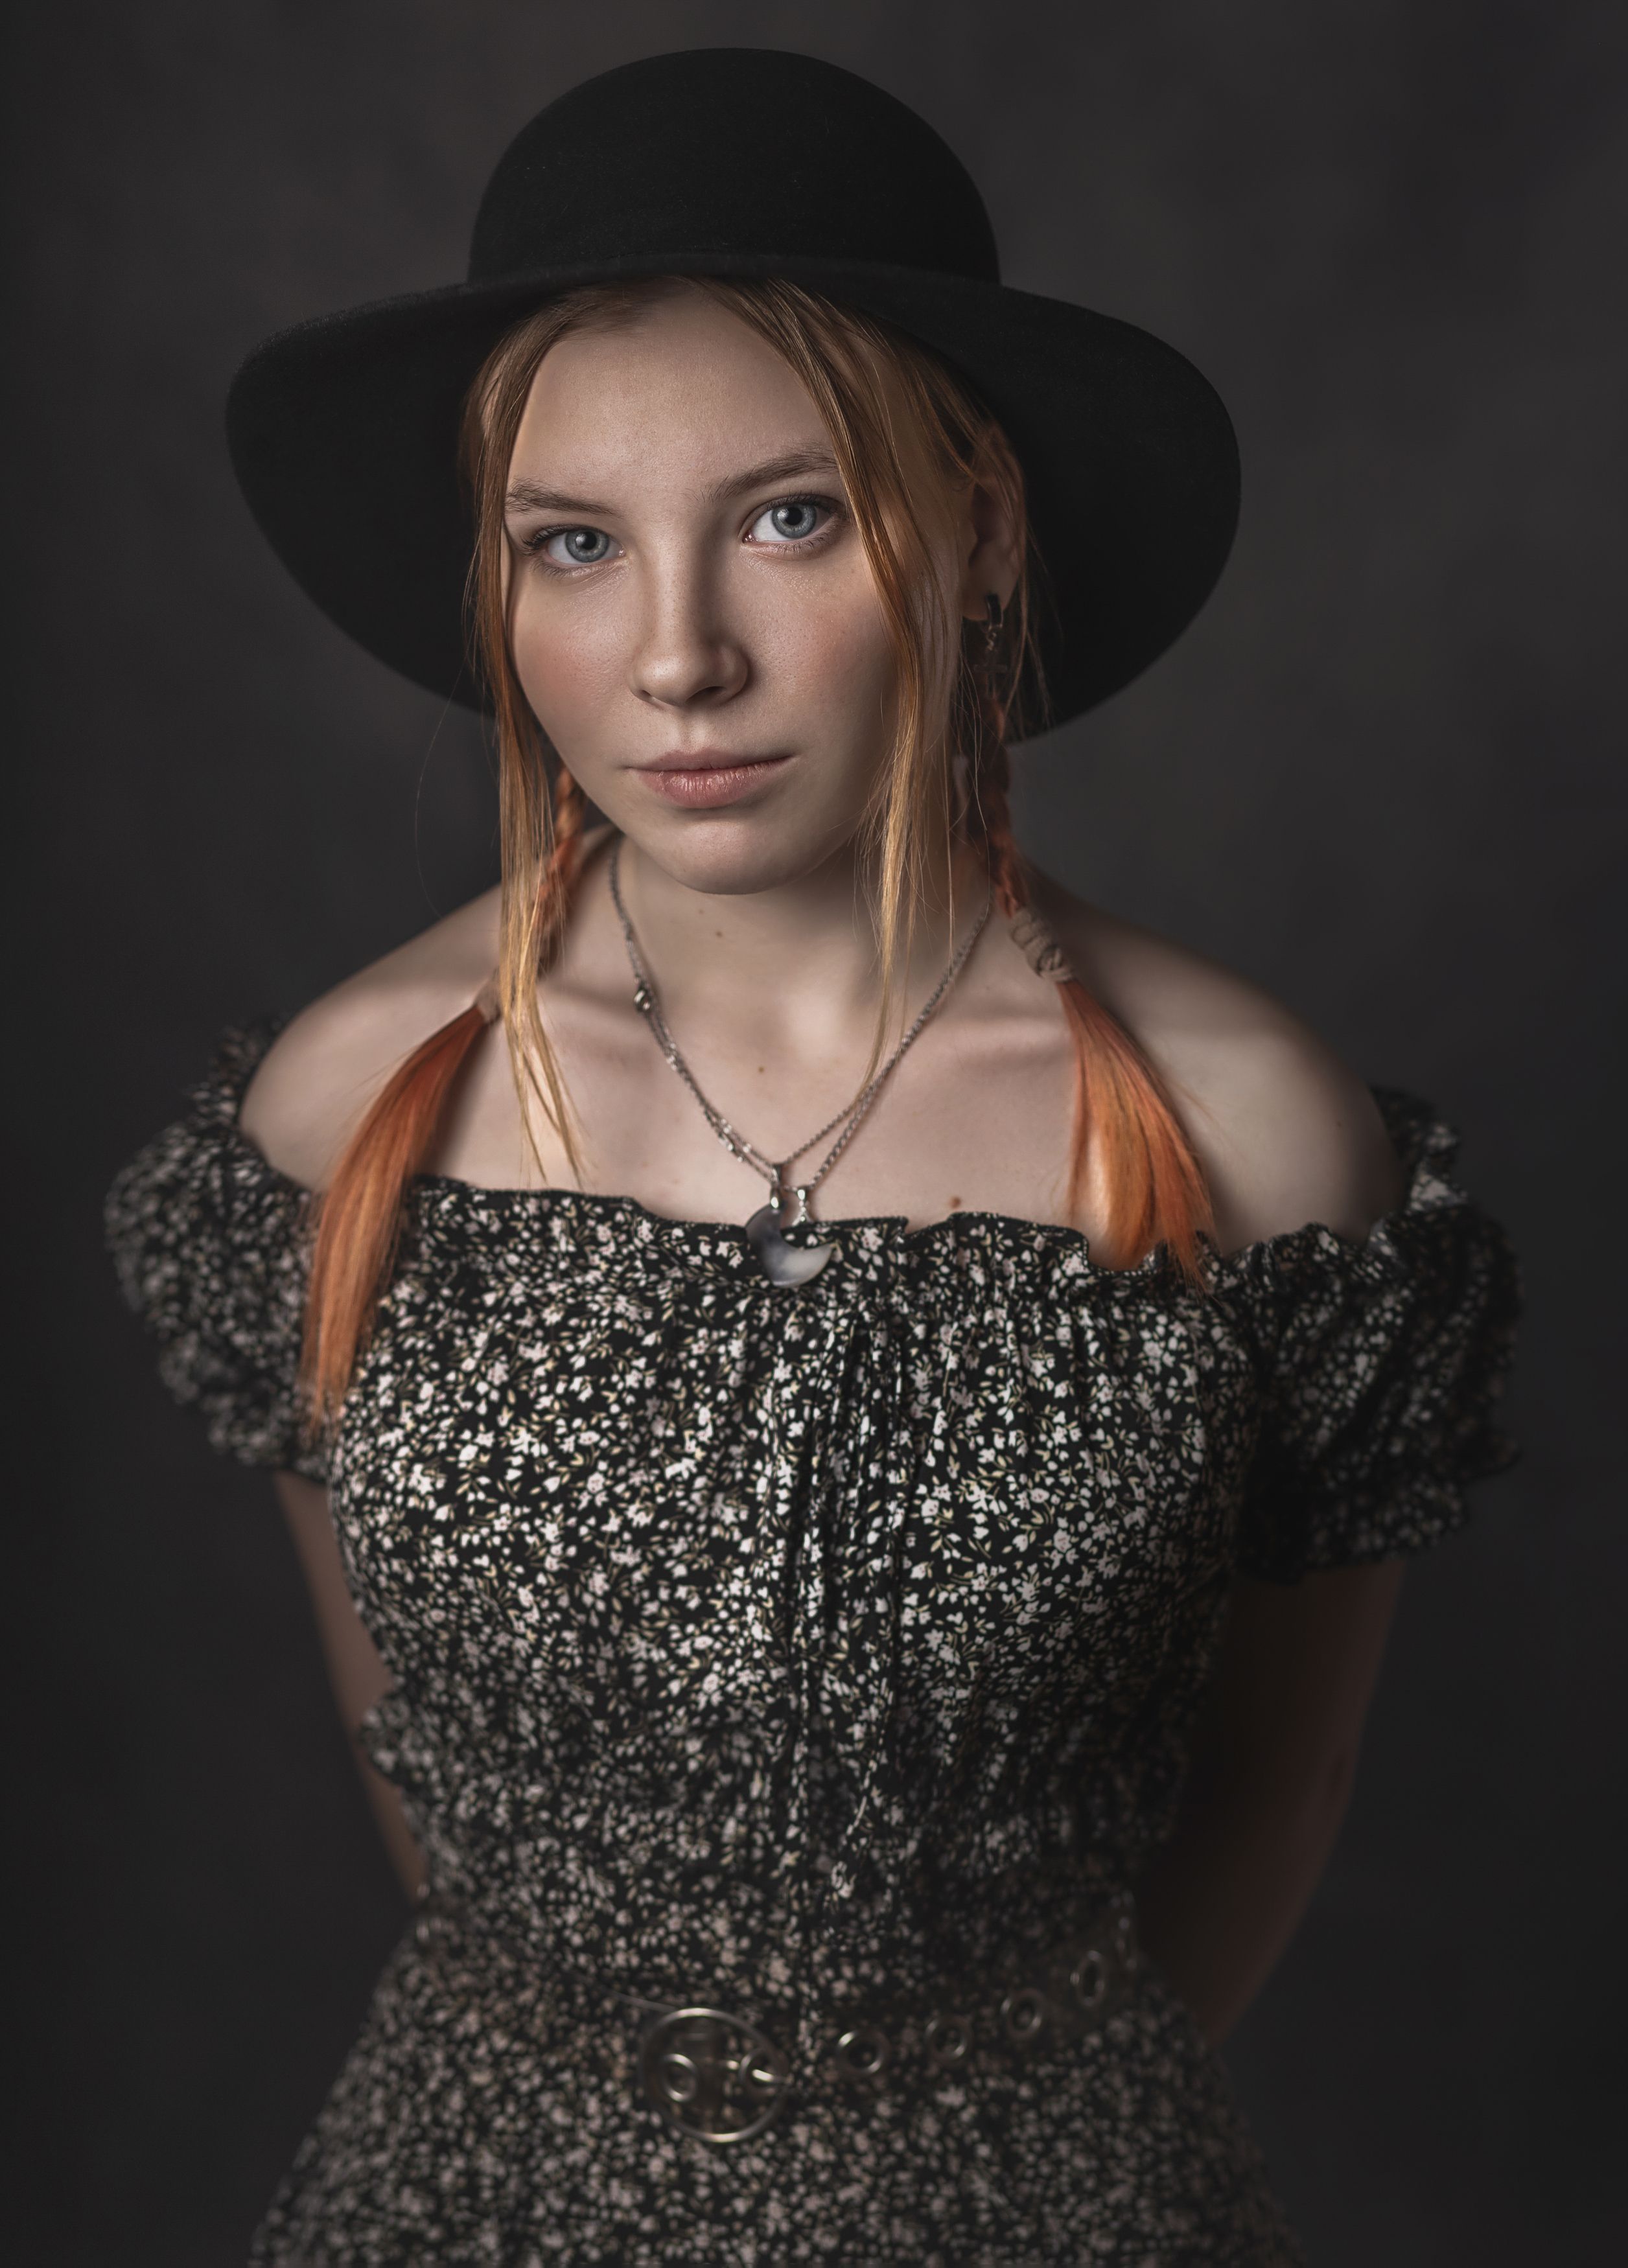 портрет, девушка, шляпа, женский портрет, взгляд, portrait, sight, hat, girl portrait, Aleksey Sologubov